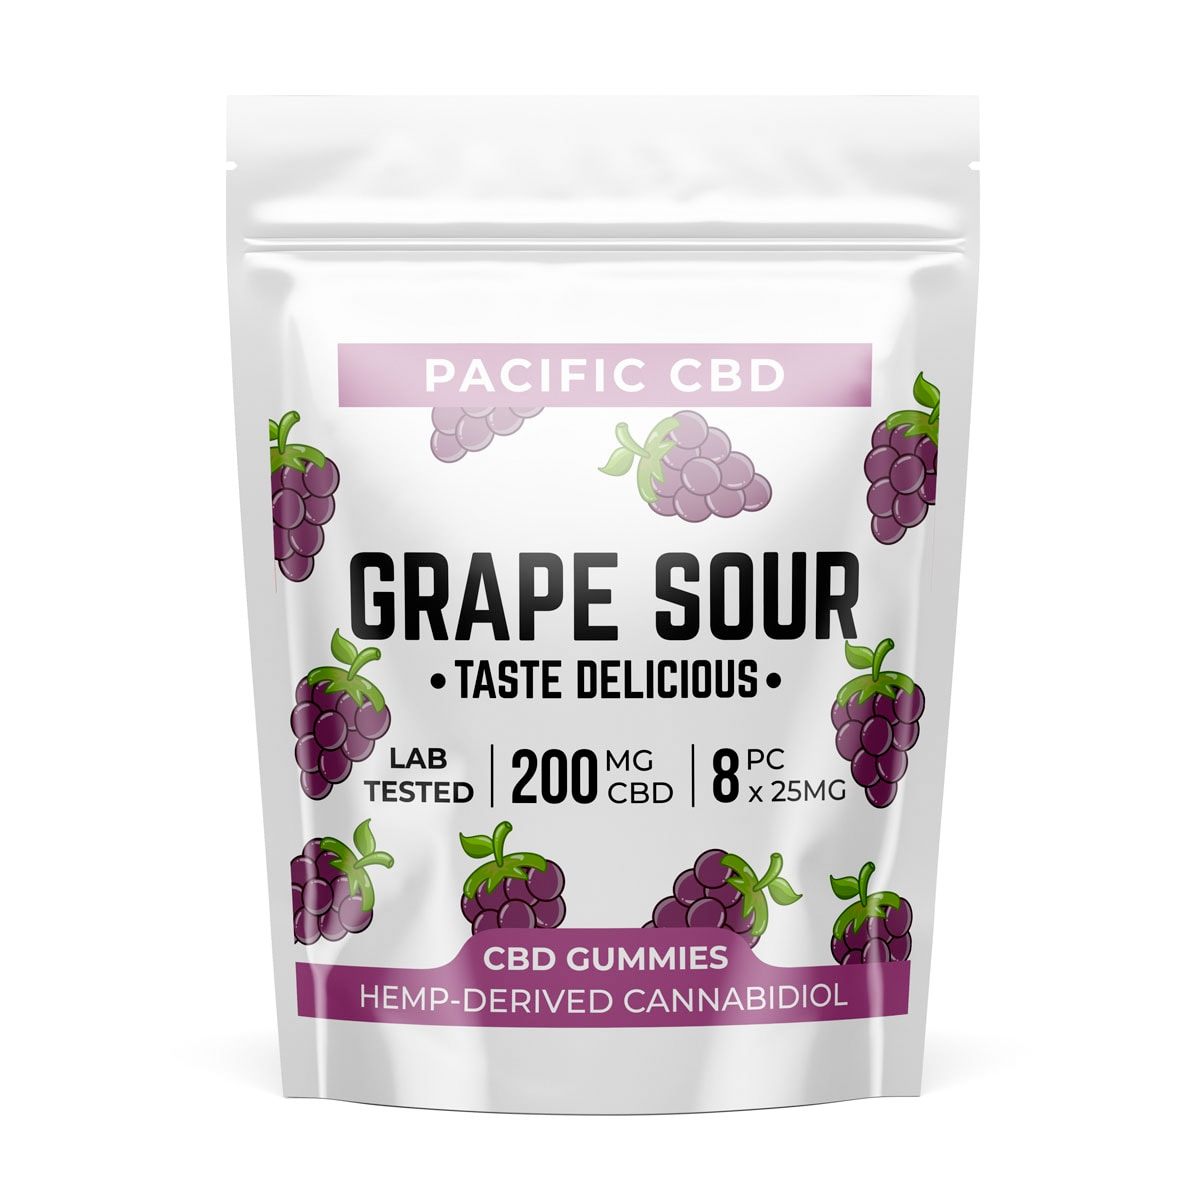 Buy Pacific CBD Grape Sour 200mg